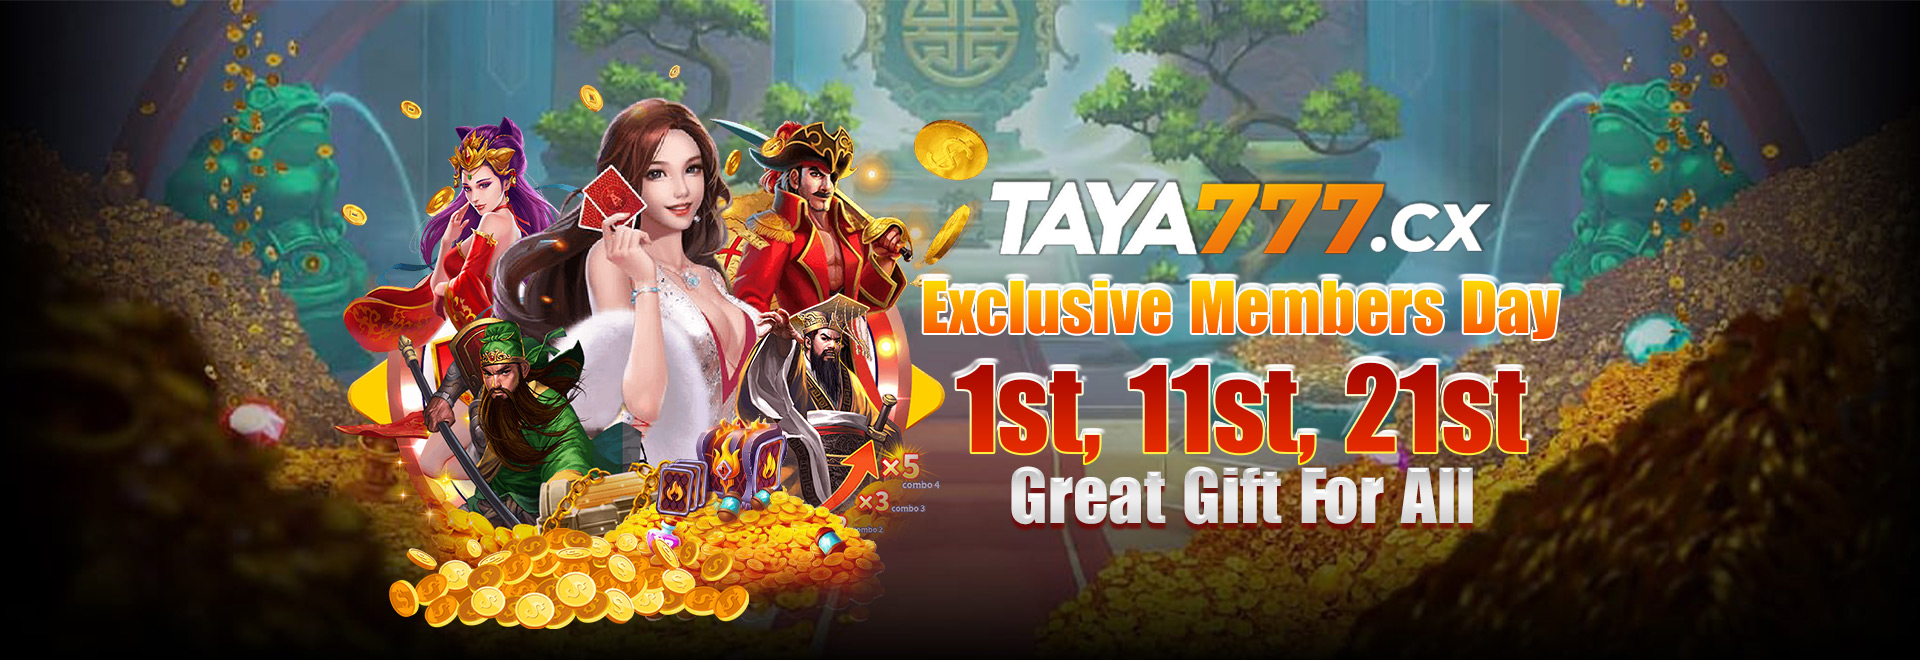 taya777 exclusive members day